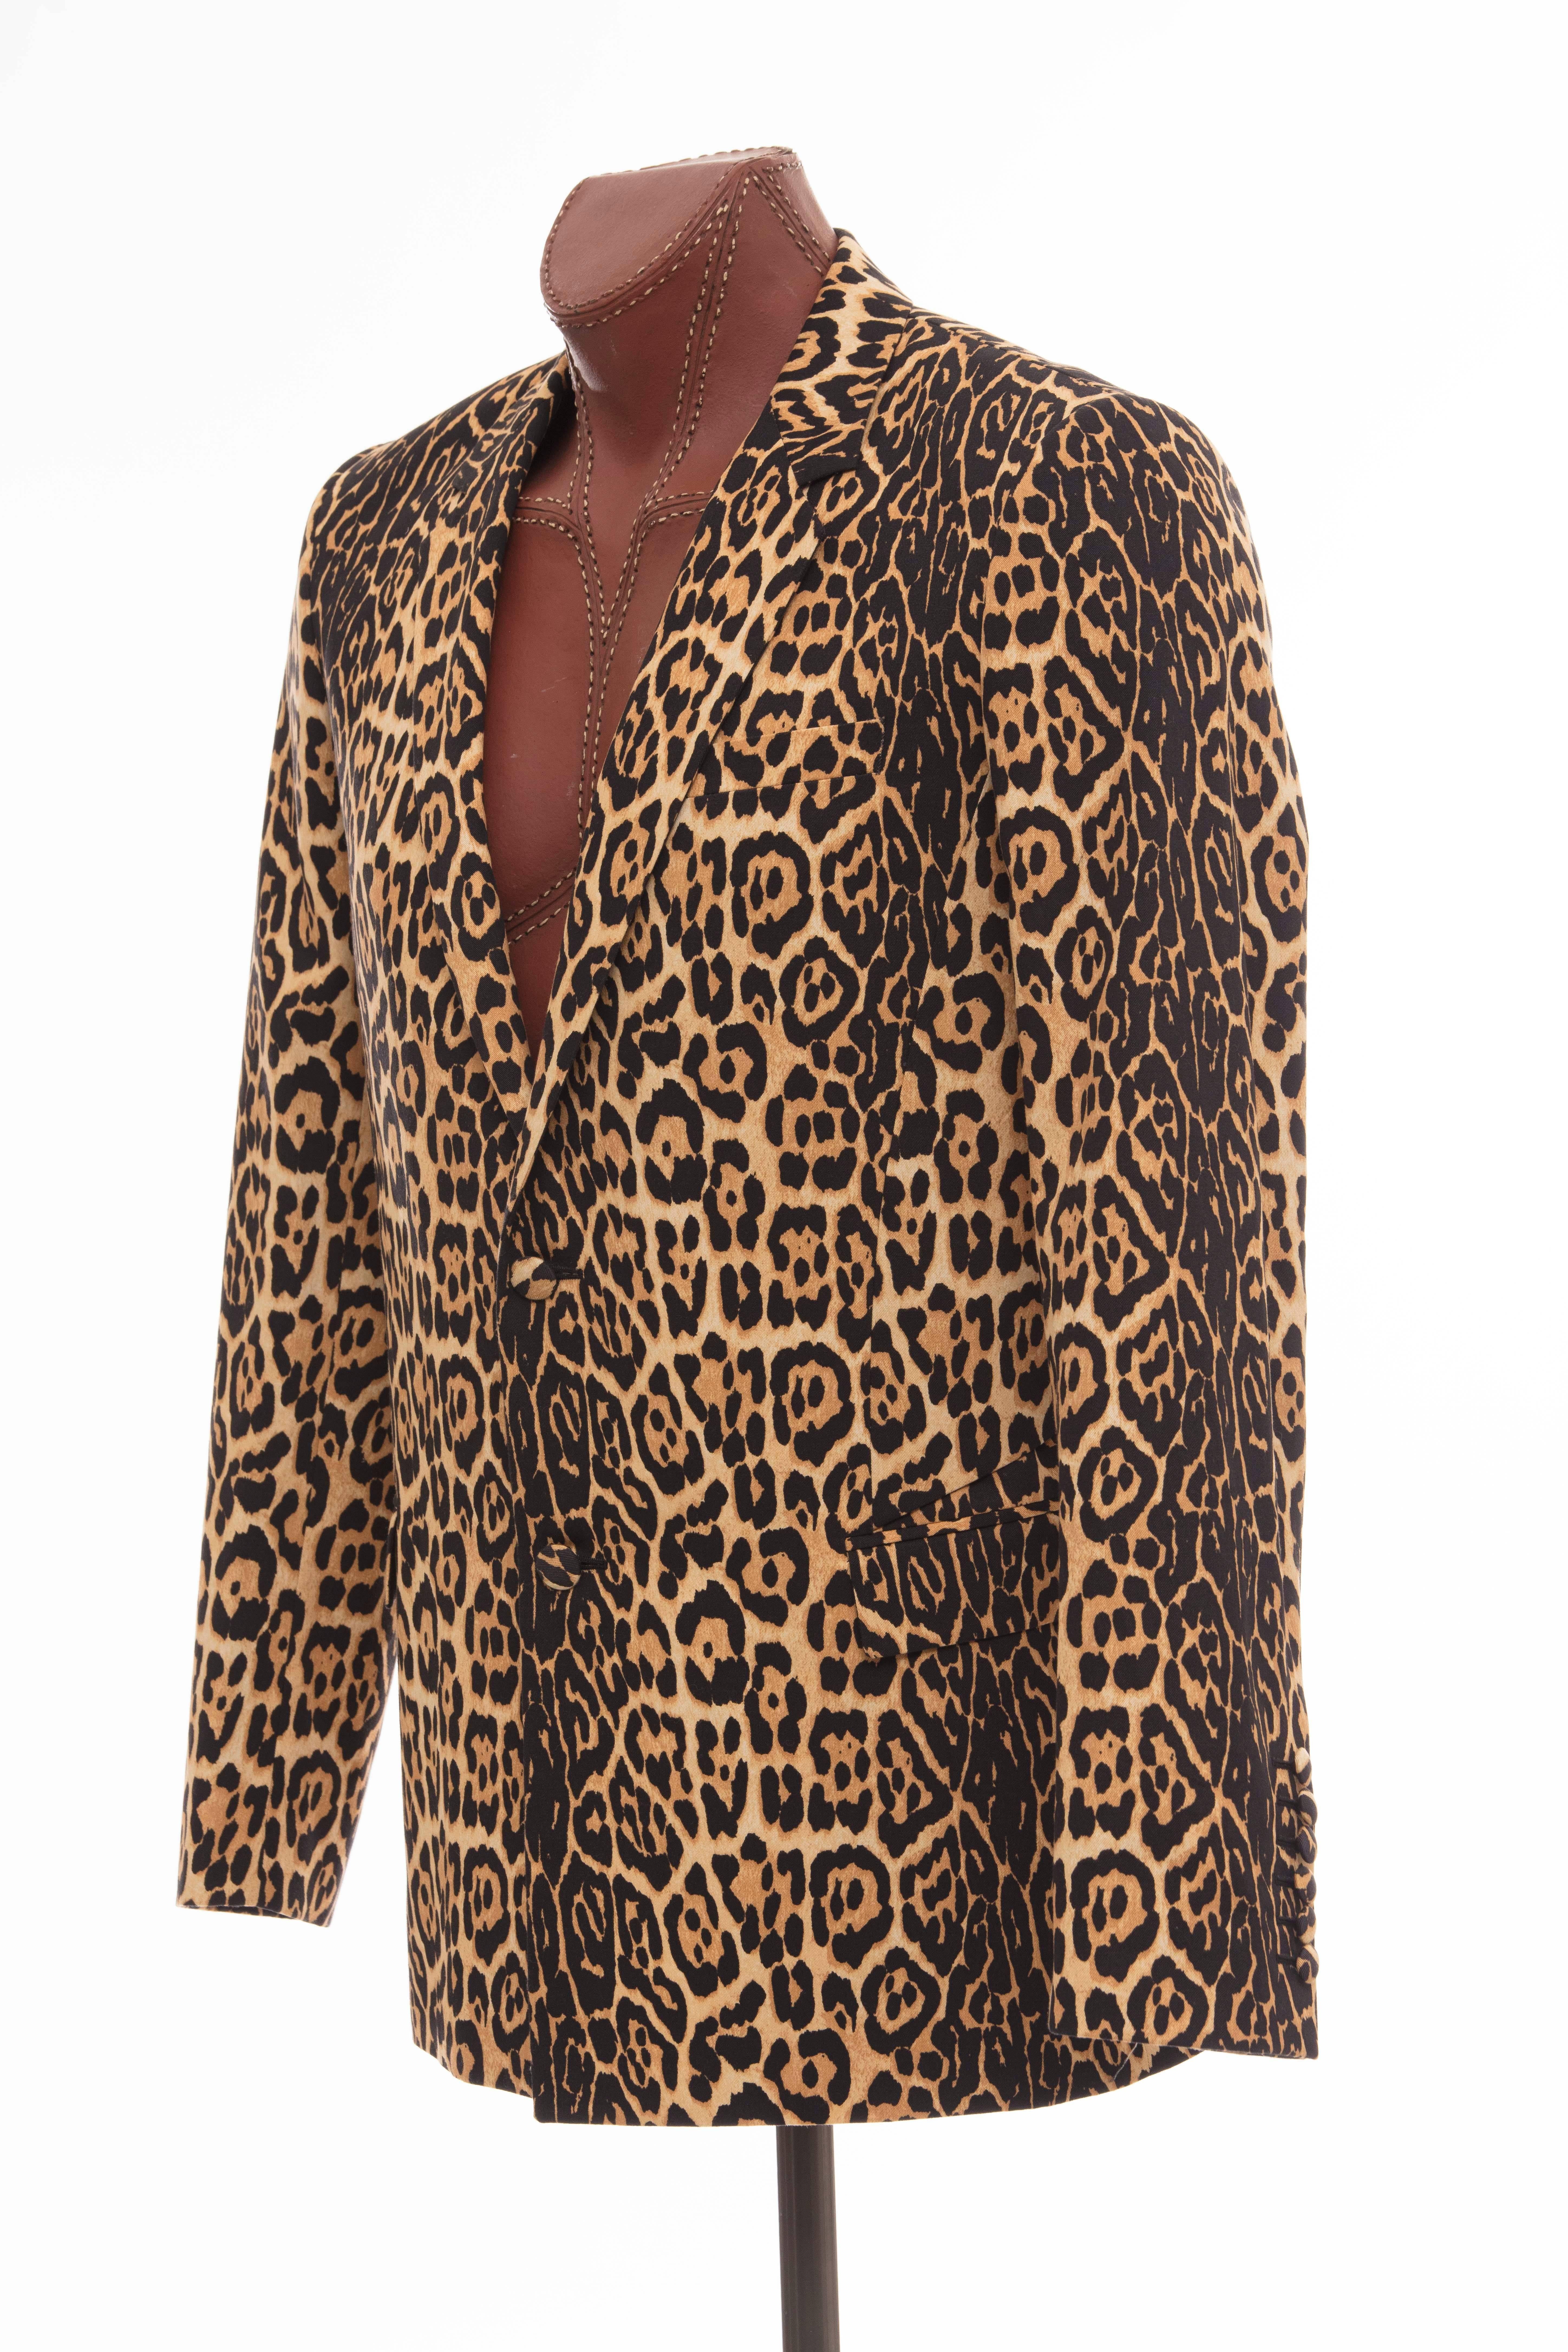 Givenchy Riccardo Tisci Men's Runway Cotton Leopard Blazer, Spring 2011 2